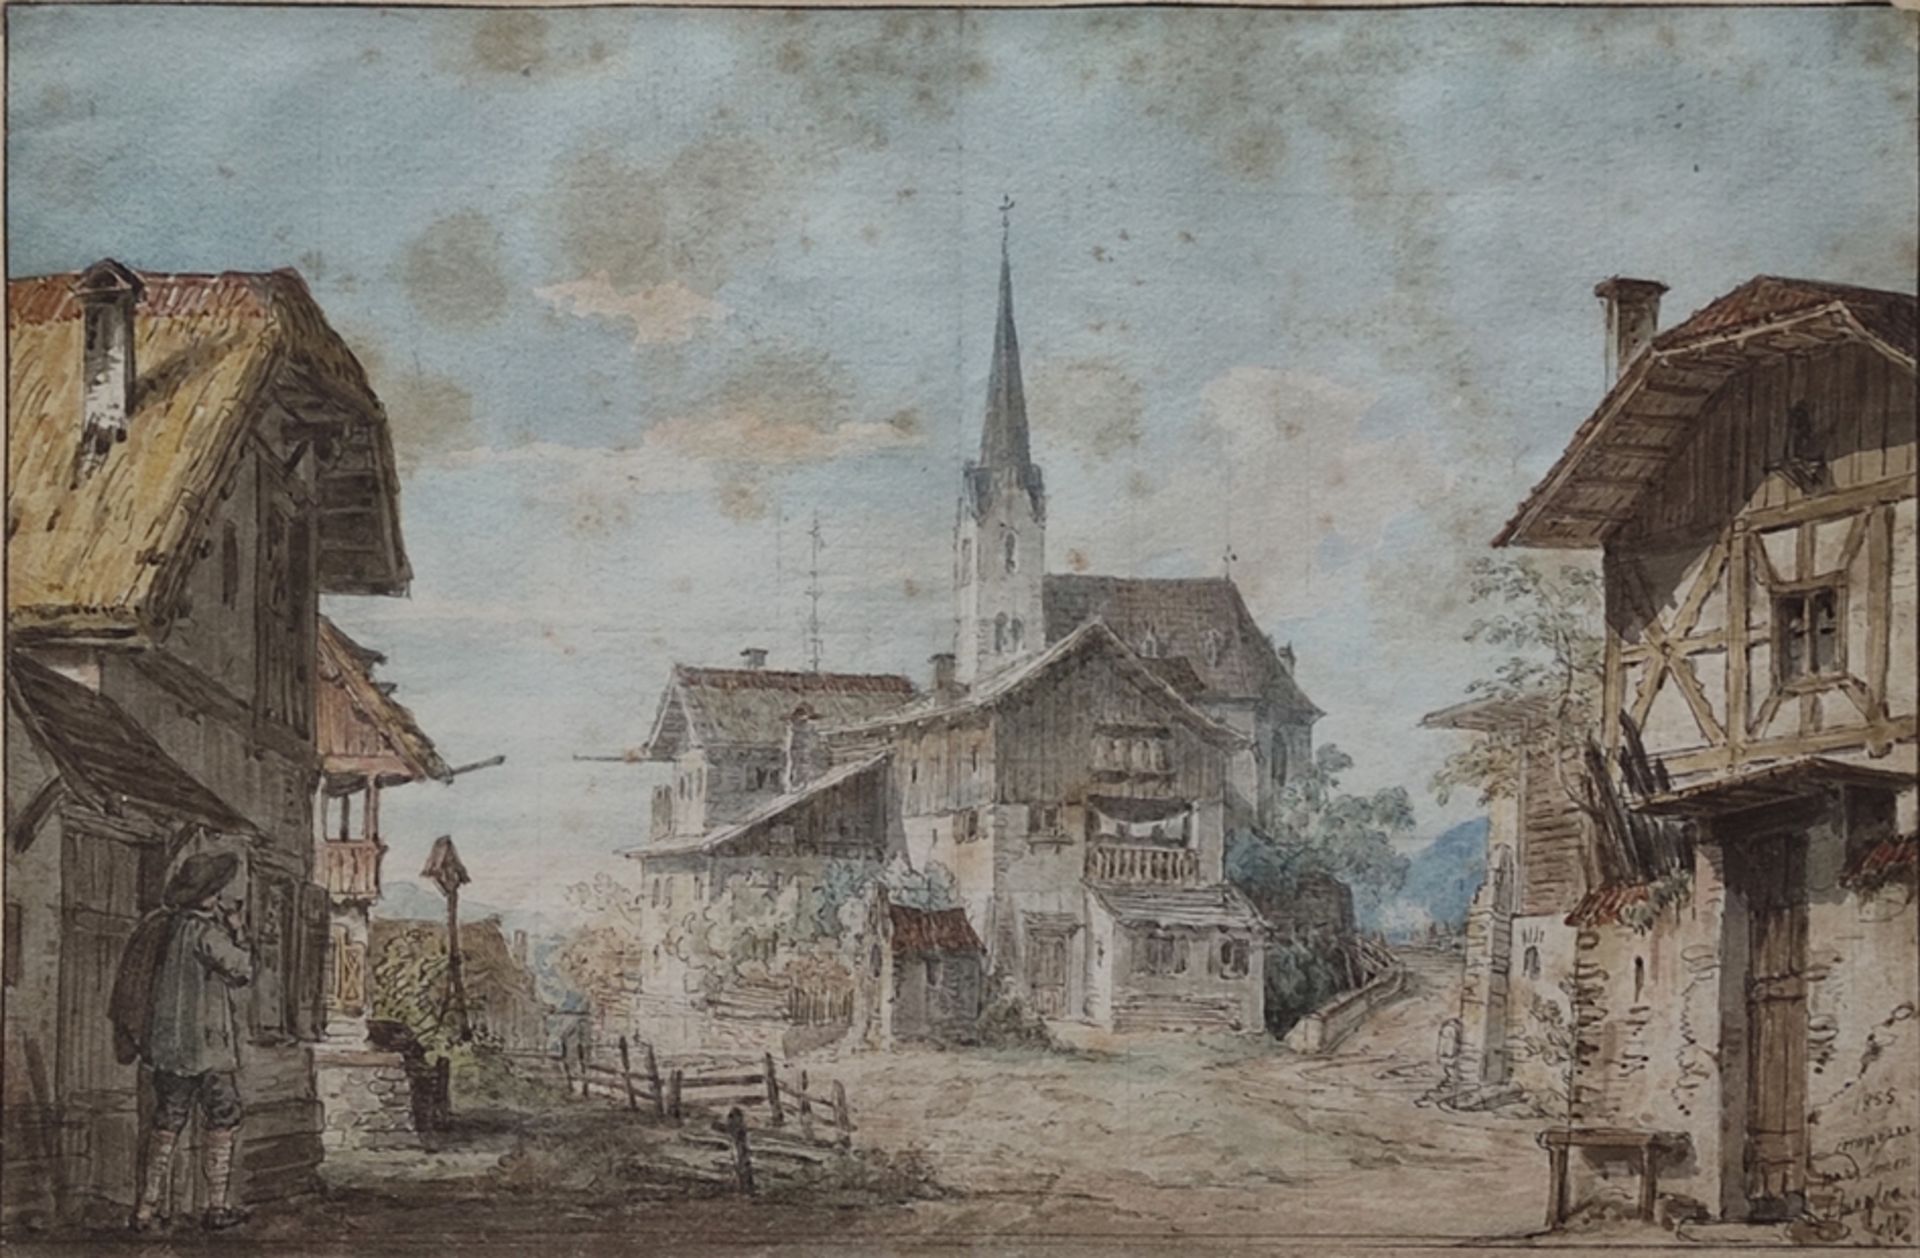 Quaglio, Simon (1795 - 1878 Munich) "Bergdorf", idyllic alpine village view with single back figure